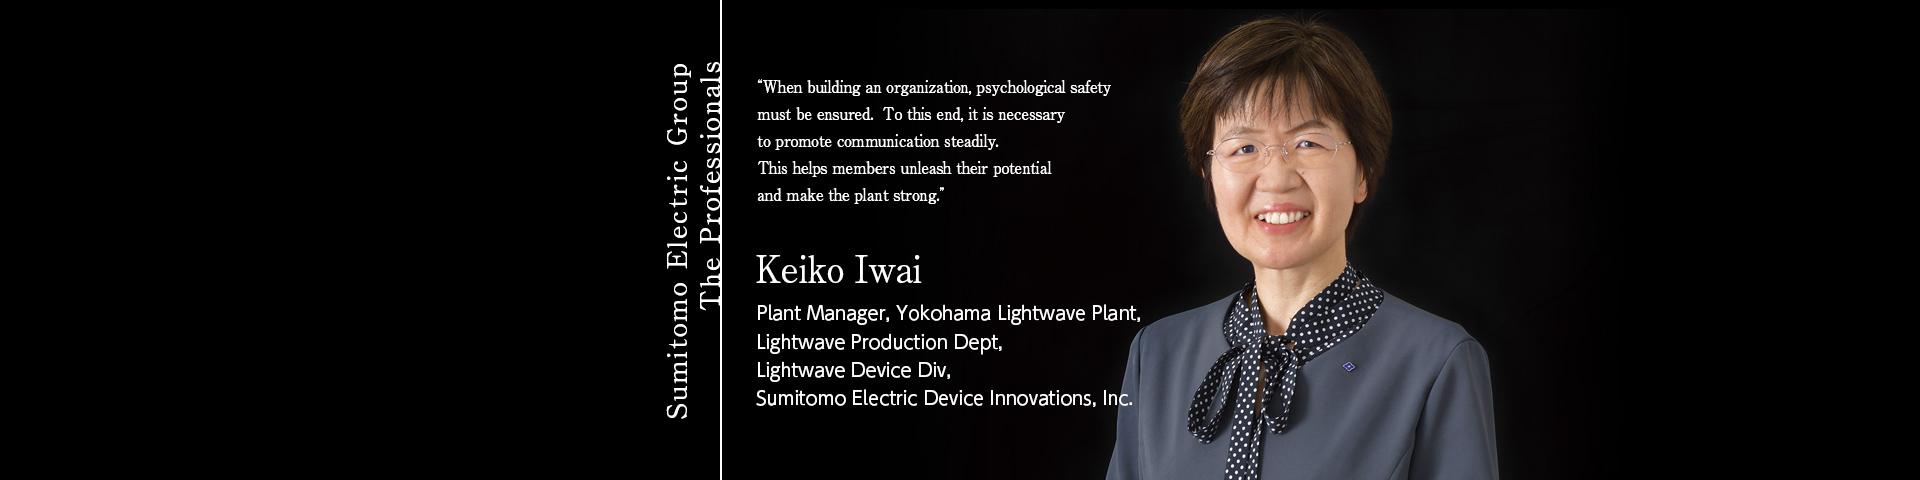 Sumitomo Electric Group The Professionals ~Keiko Iwai Plant Manager, Yokohama Lightwave Plant, Lightwave Production Dept, Lightwave Device Div, Sumitomo Electric Device Innovations, Inc.~